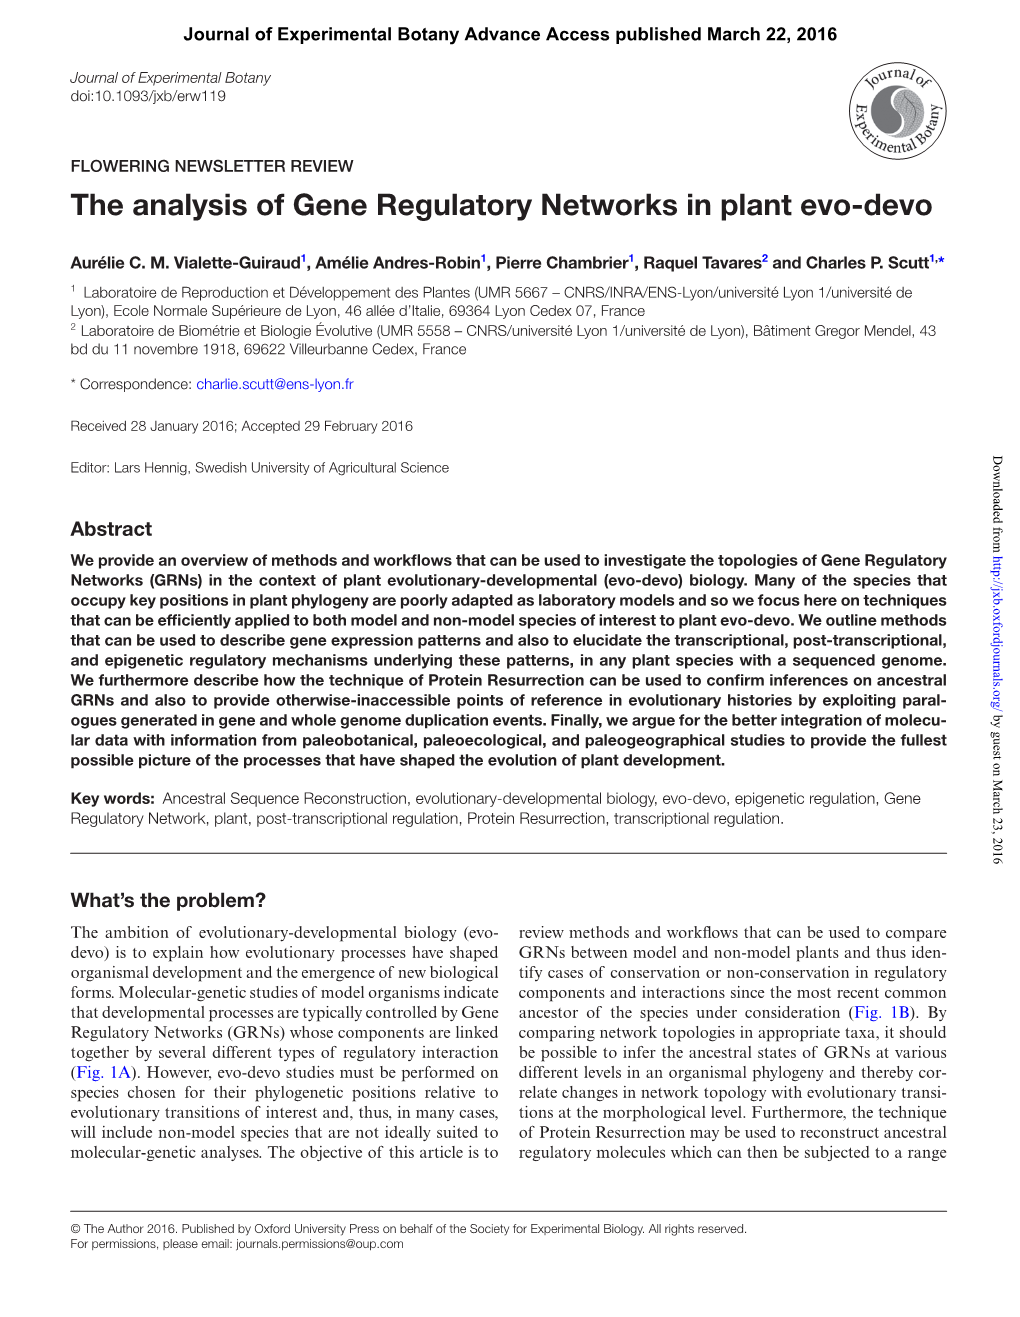 The Analysis of Gene Regulatory Networks in Plant Evo-Devo